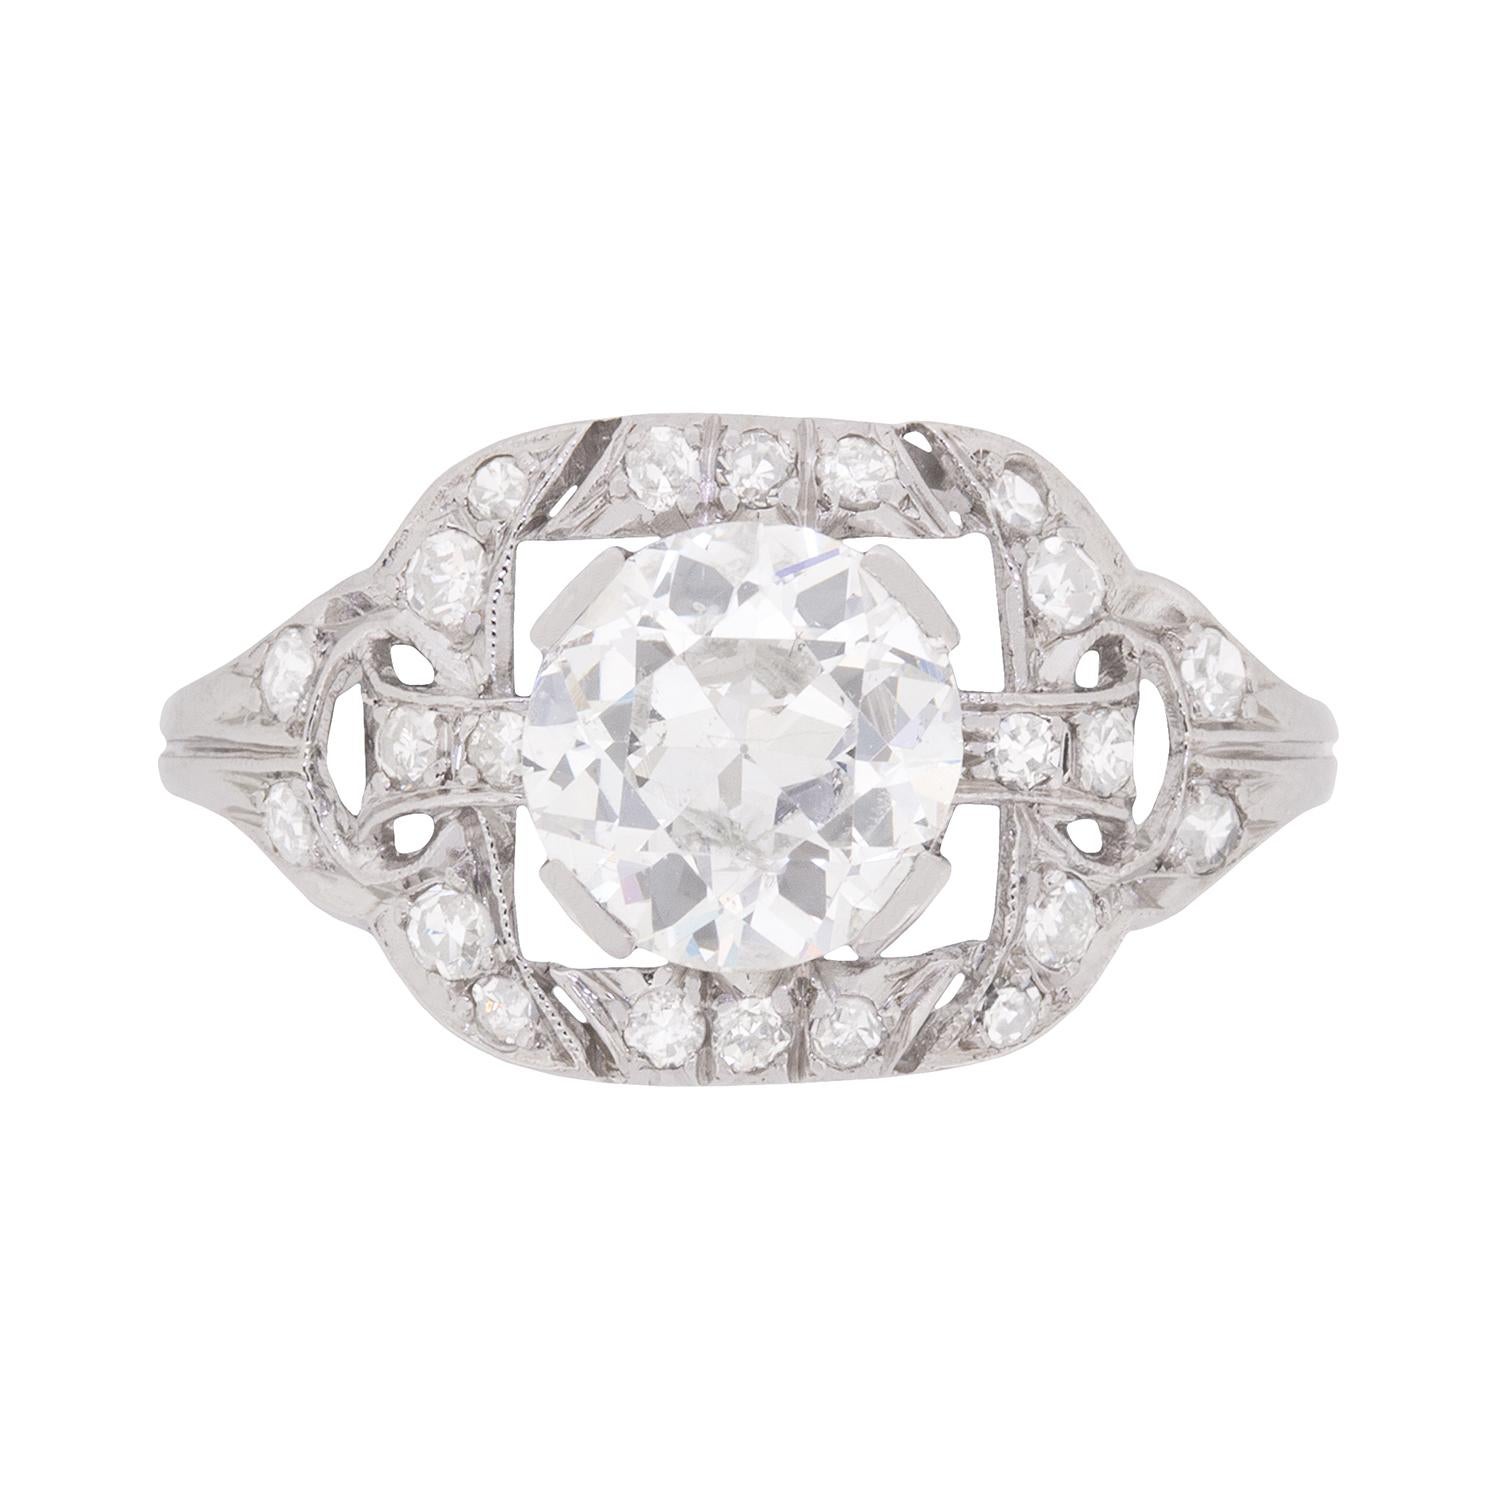 Art Deco 1.35 Carat Diamond Cluster Engagement Ring, circa 1920s